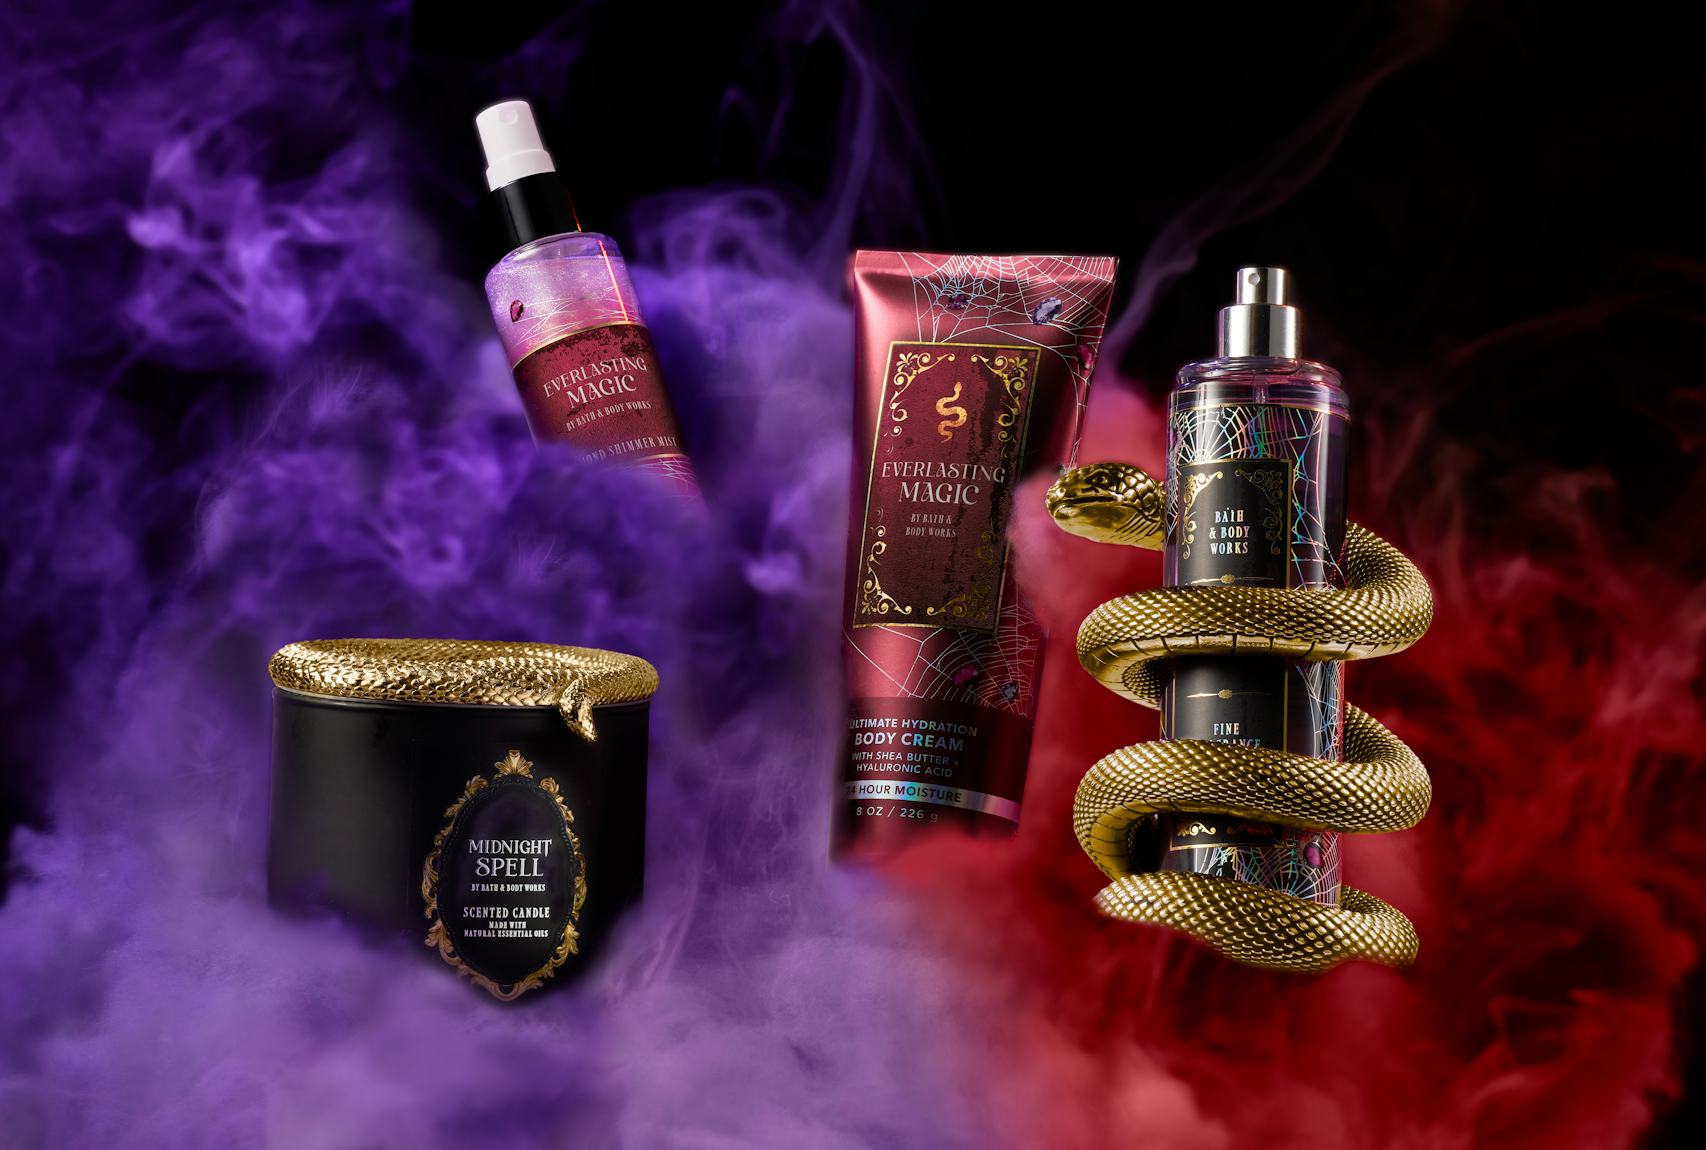 Magic In The Air Bath &amp; Body Works perfume - a fragrance